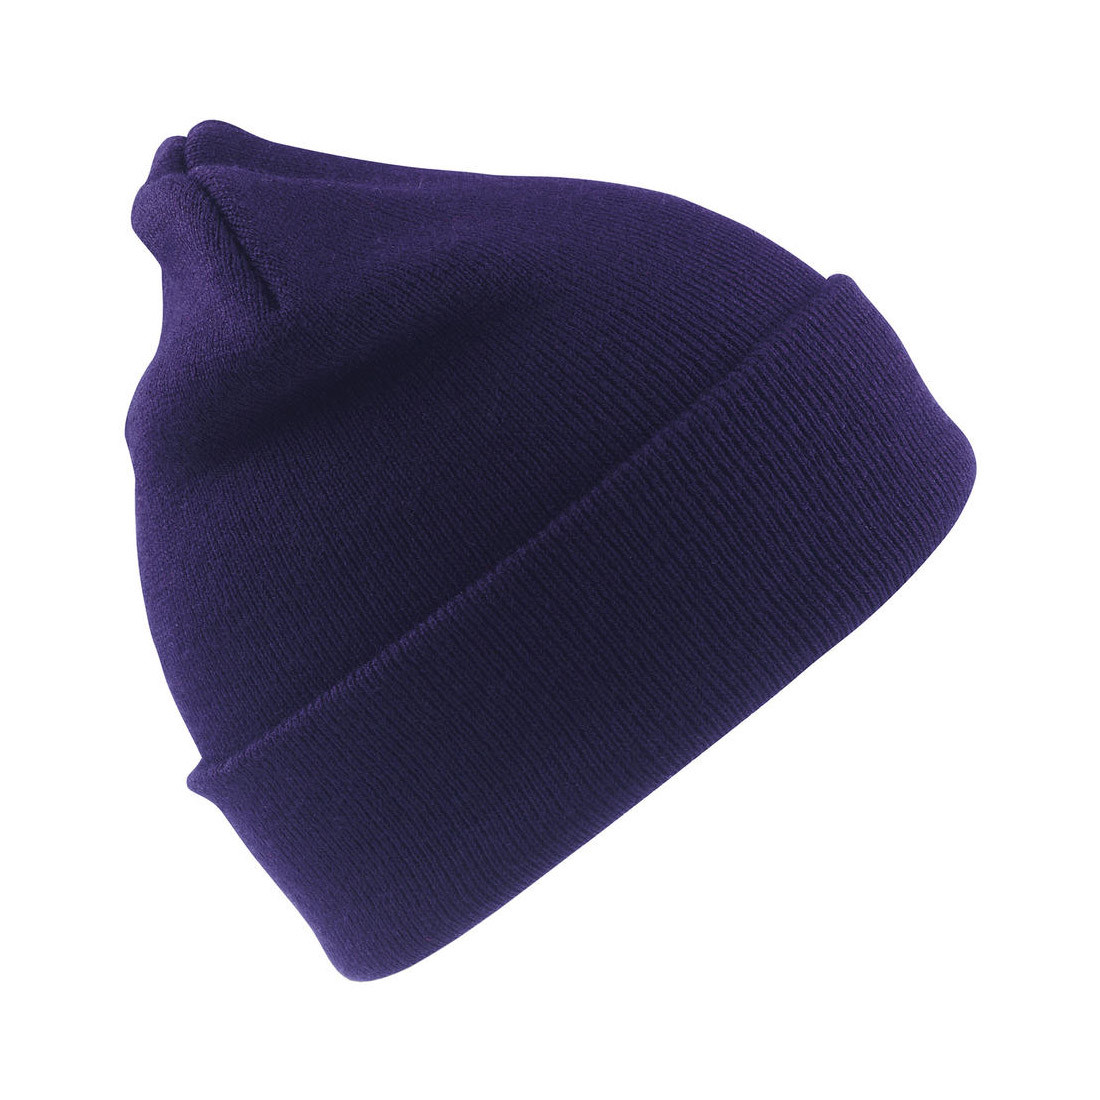 Woolly Ski Cap - Arbeitskleidung